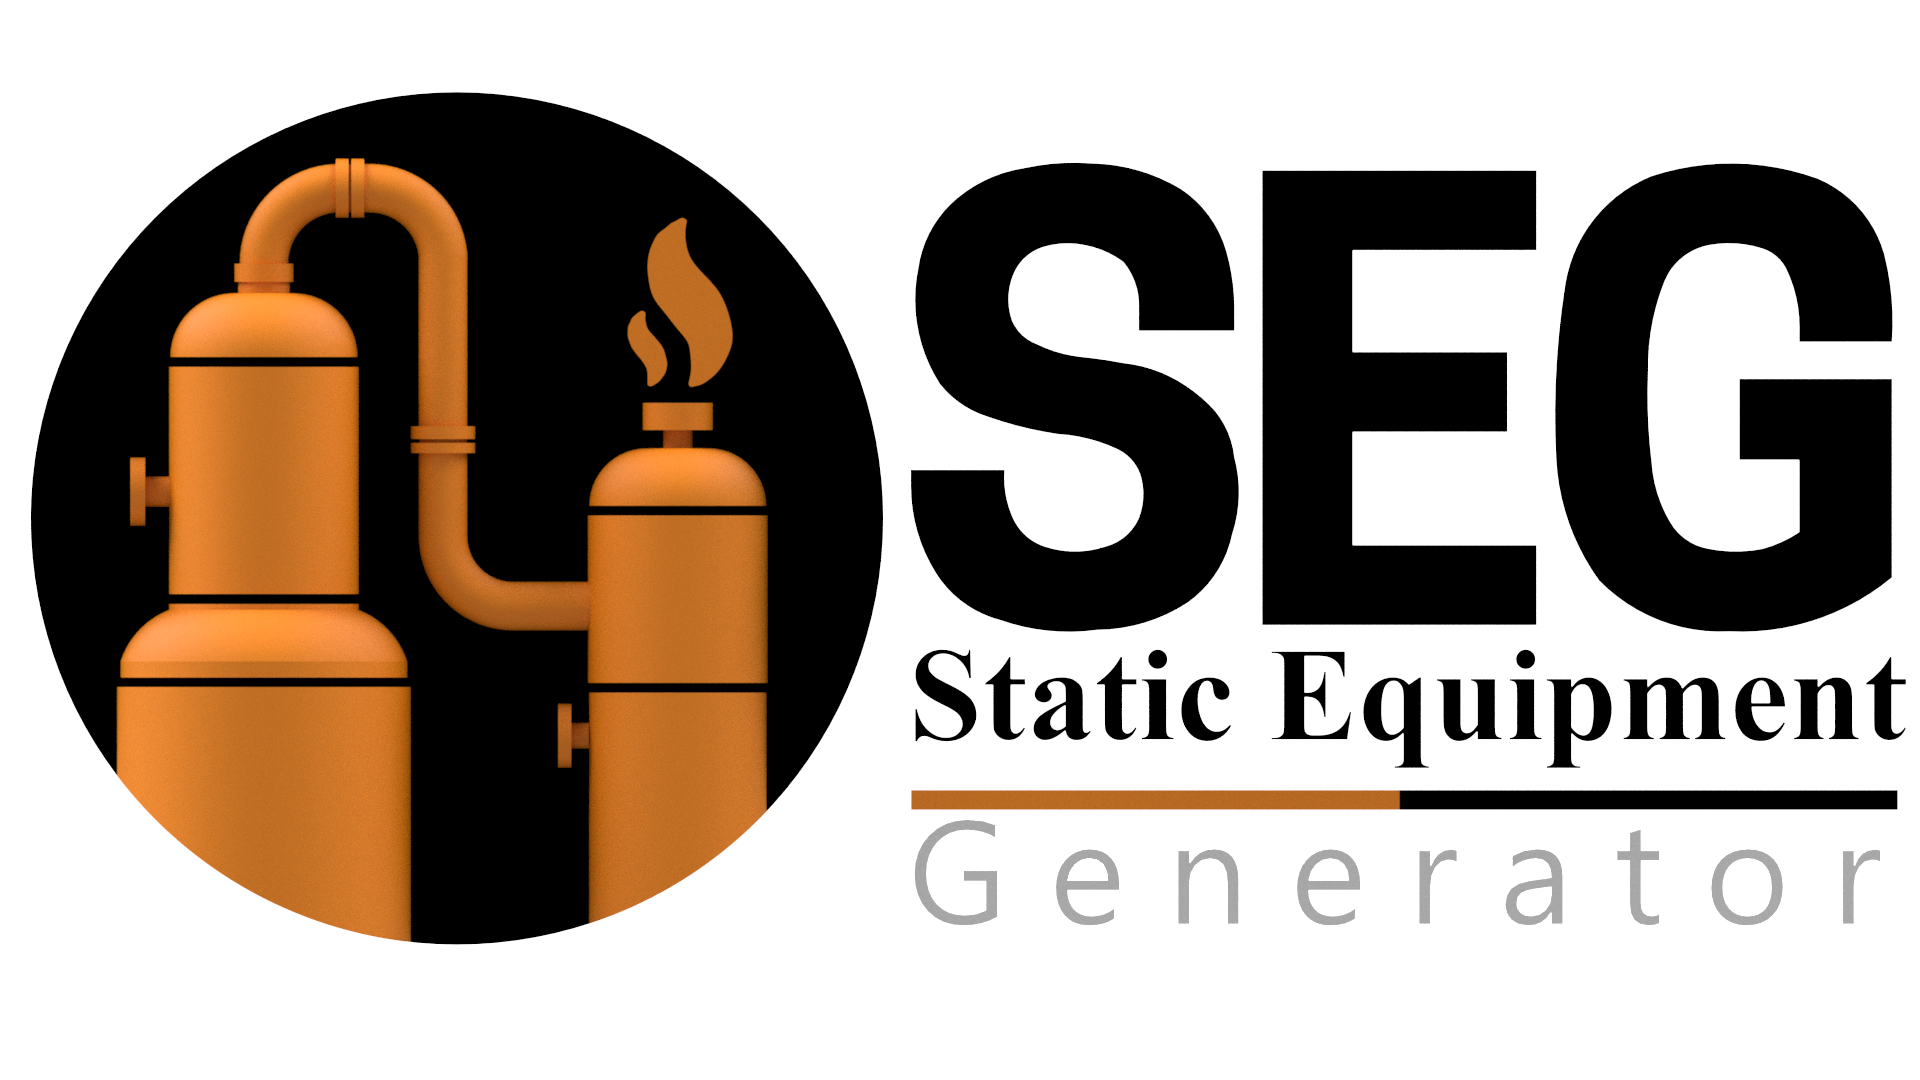 SEG Software General Information